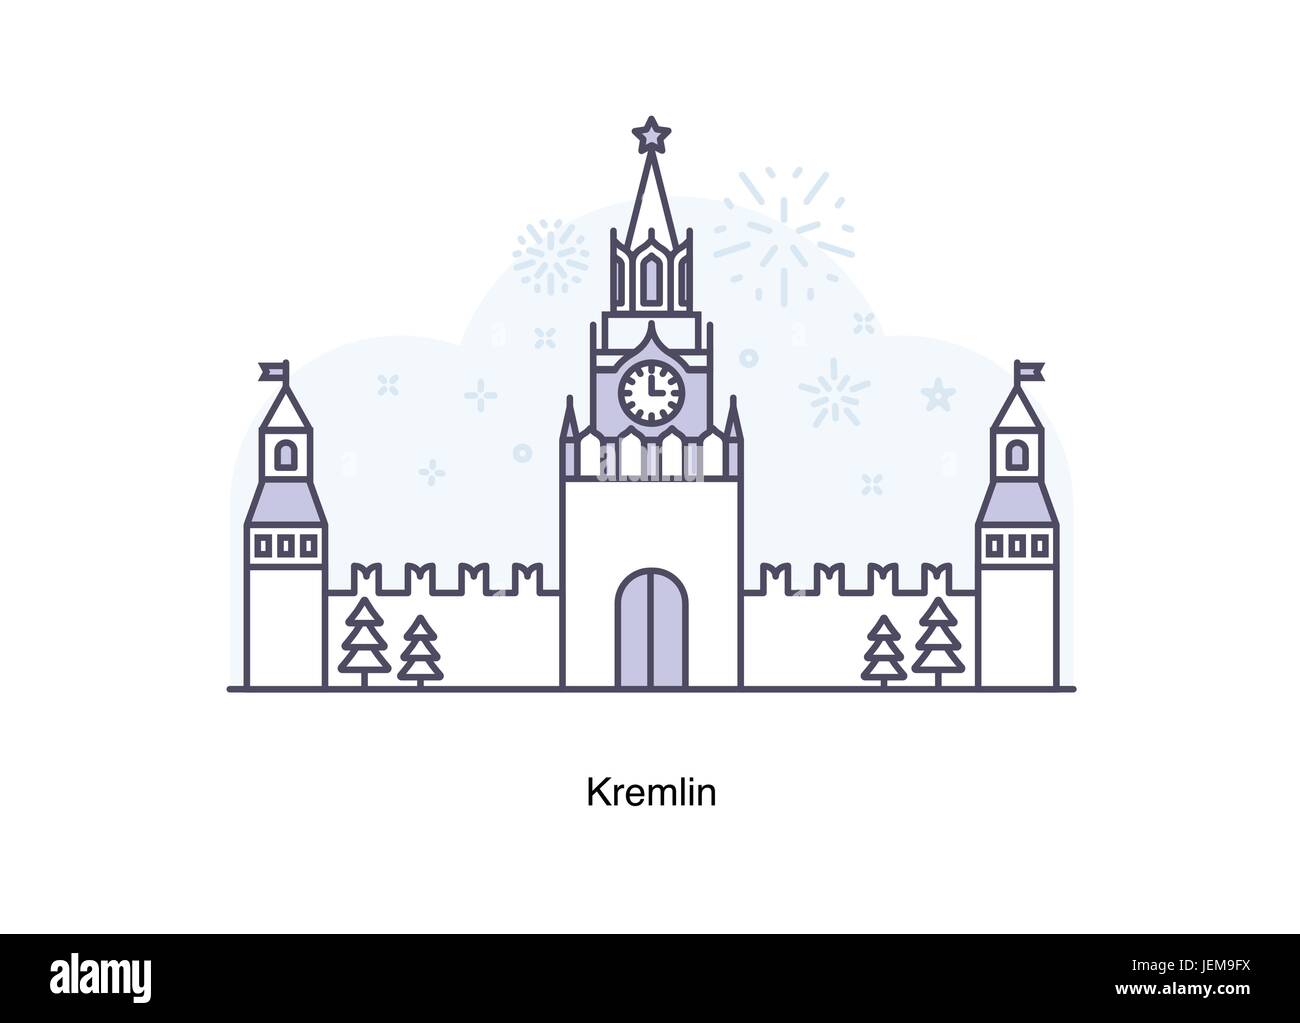 Vector line illustration of Kremlin, Moscow, Russia Stock Vector